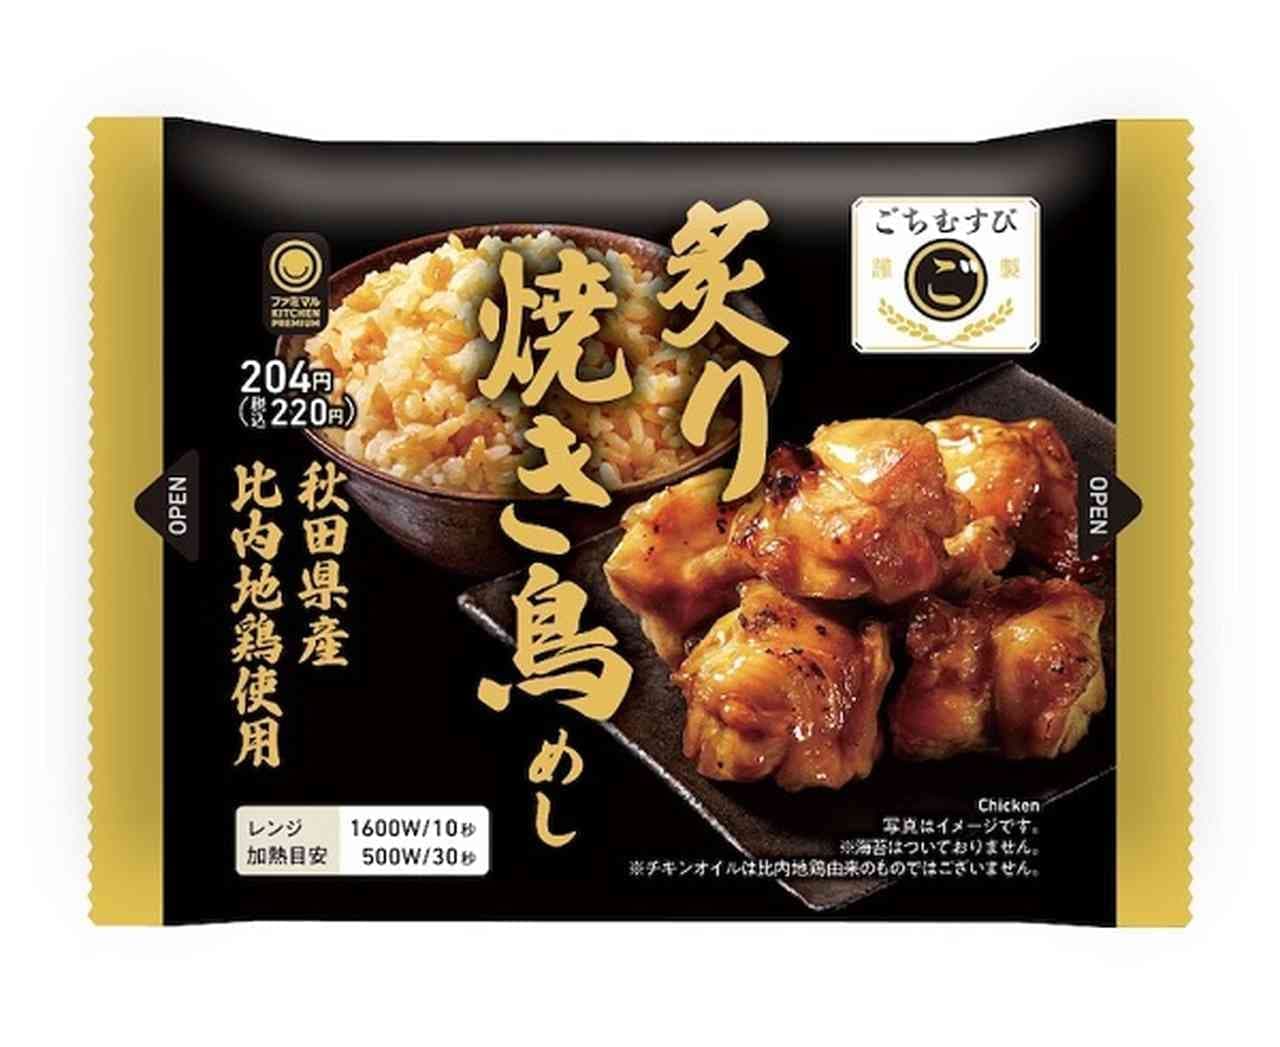 Famima "Gochimusubi" Hinai Jidori Seared and Grilled Chicken Rice